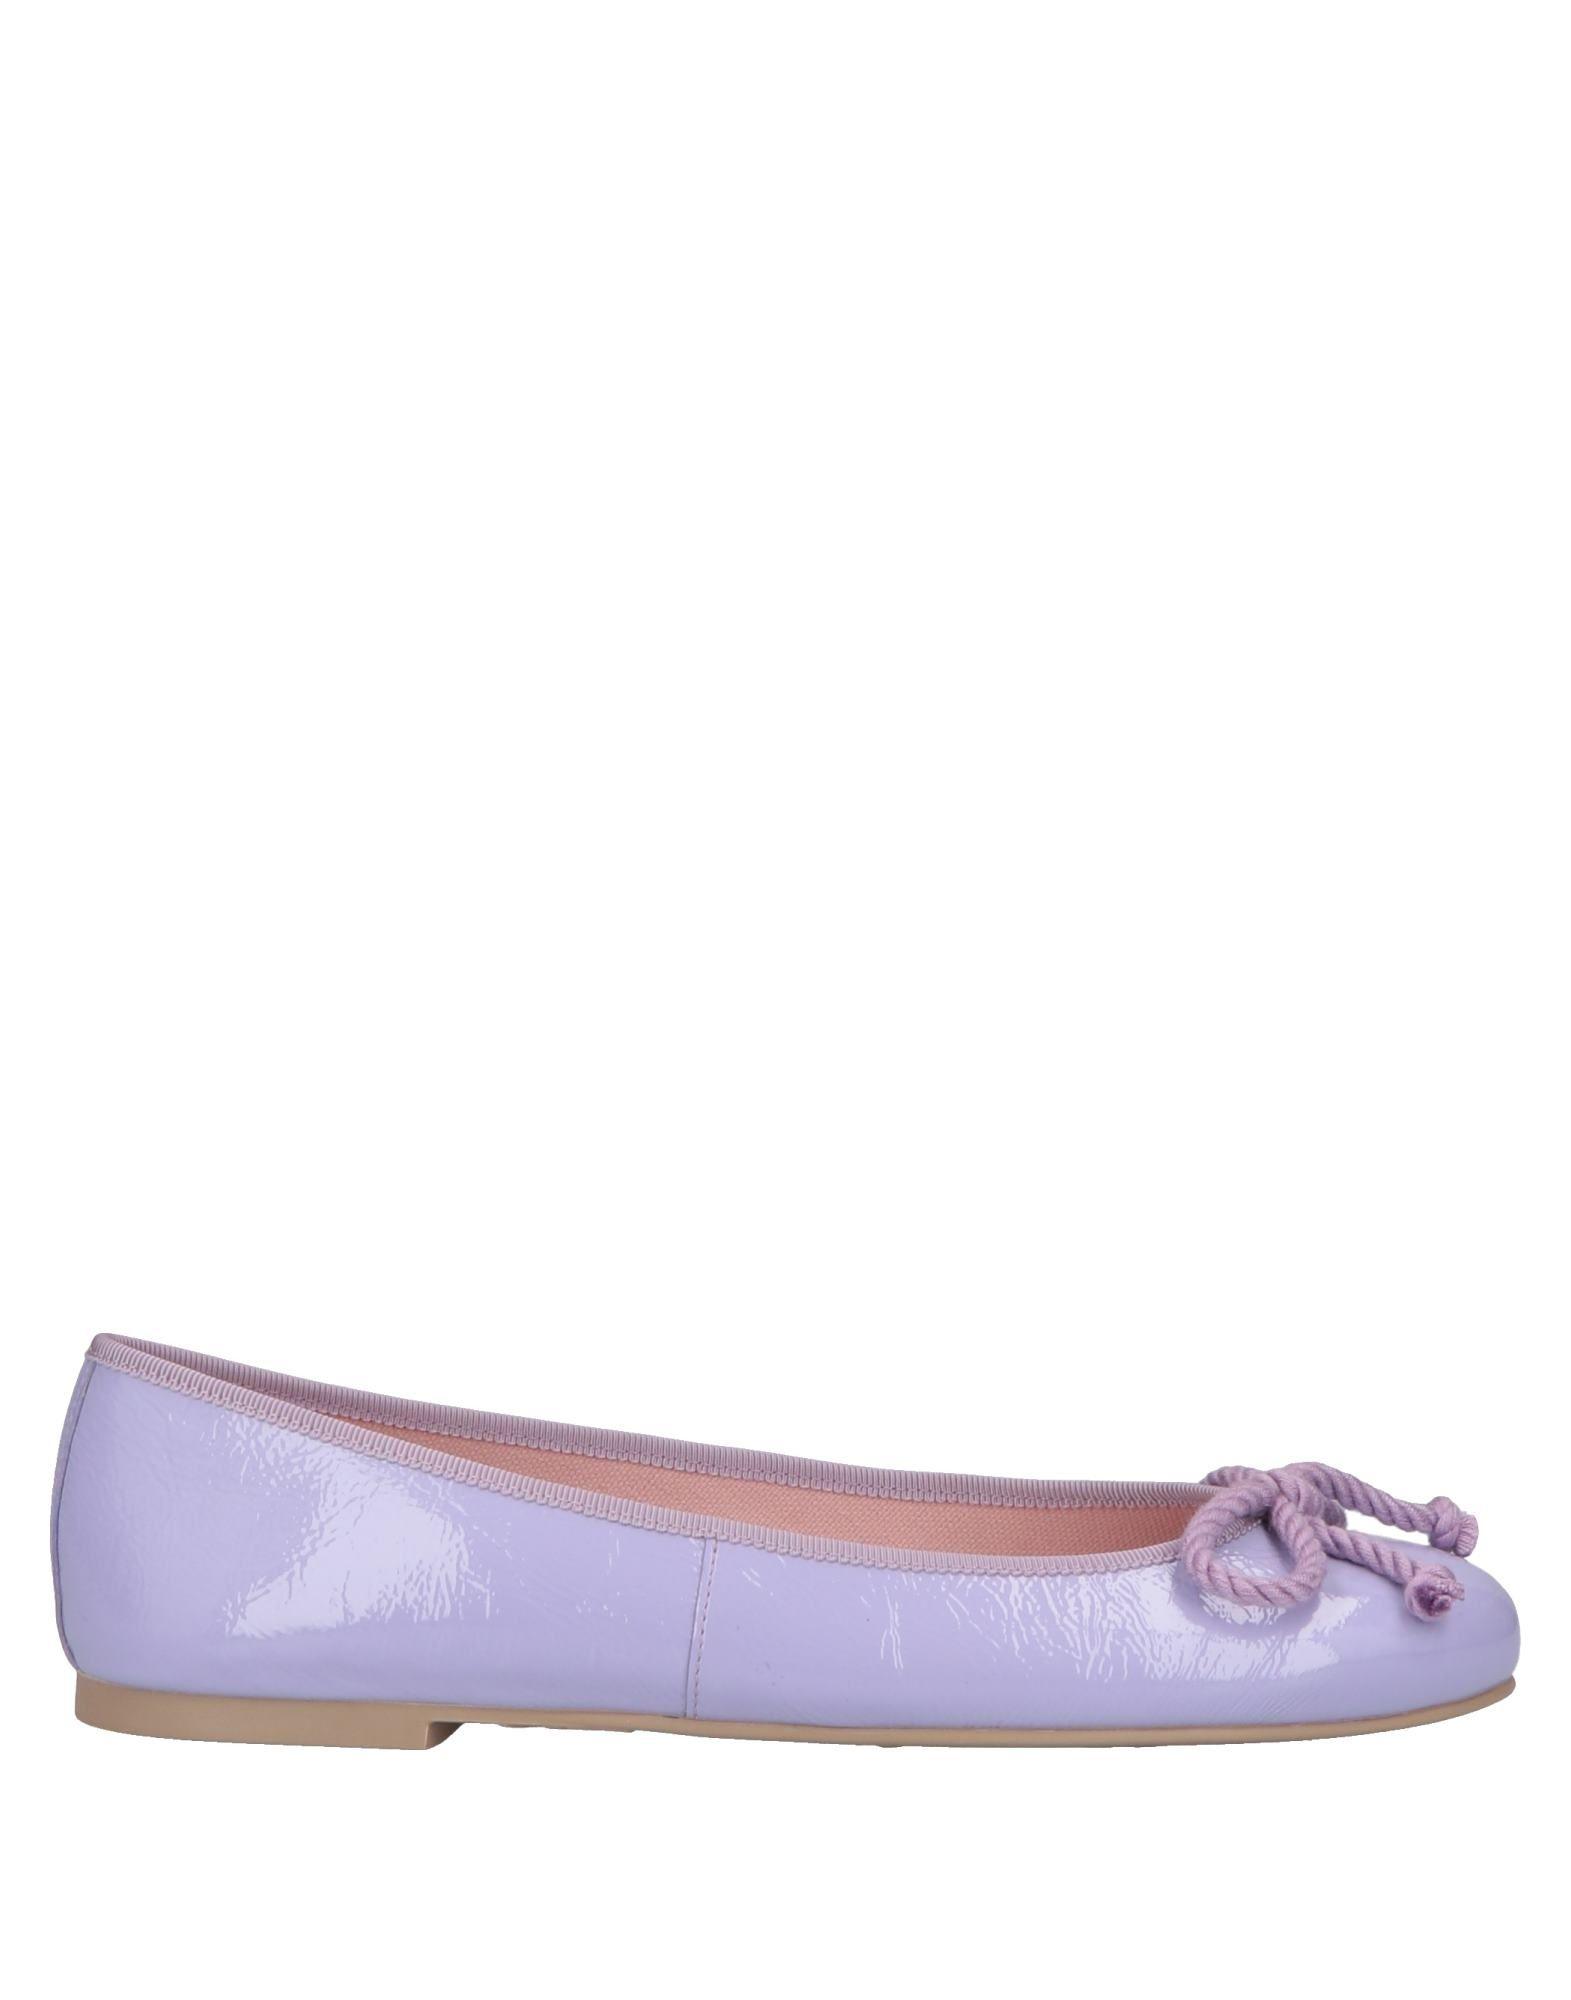 Pretty Ballerinas Rubber Ballet Flats in Lilac (Purple) - Lyst